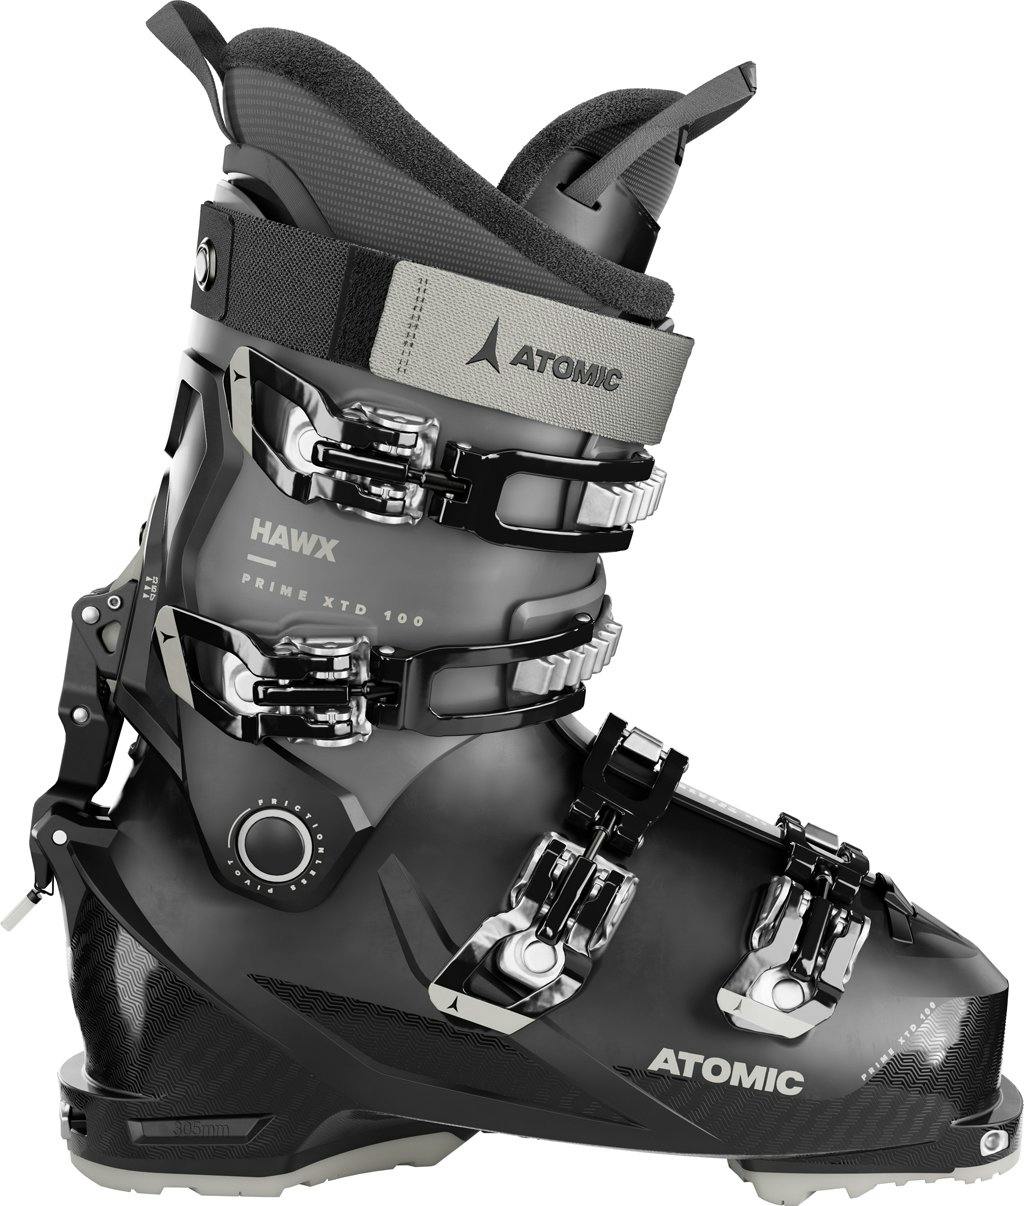 Product image for Hawx Prime XTD 100 GW Ski Boots - Unisex